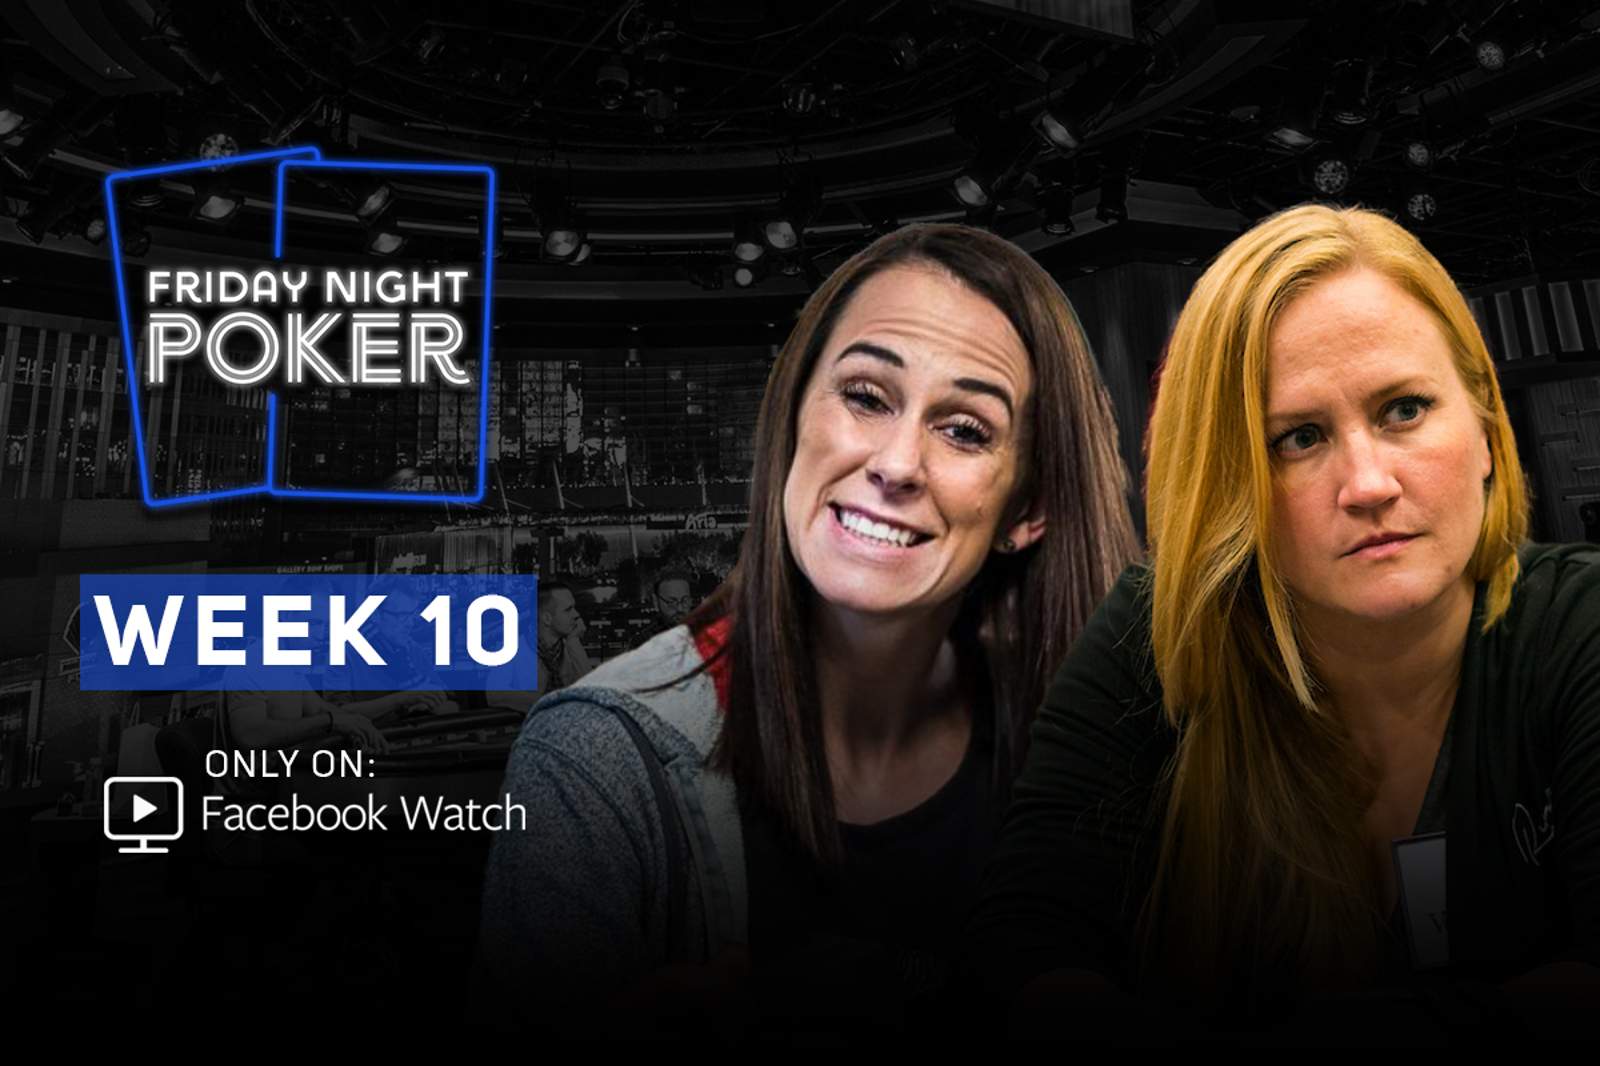 Andersen & Kerstetter Headline Week 10 of Friday Night Poker